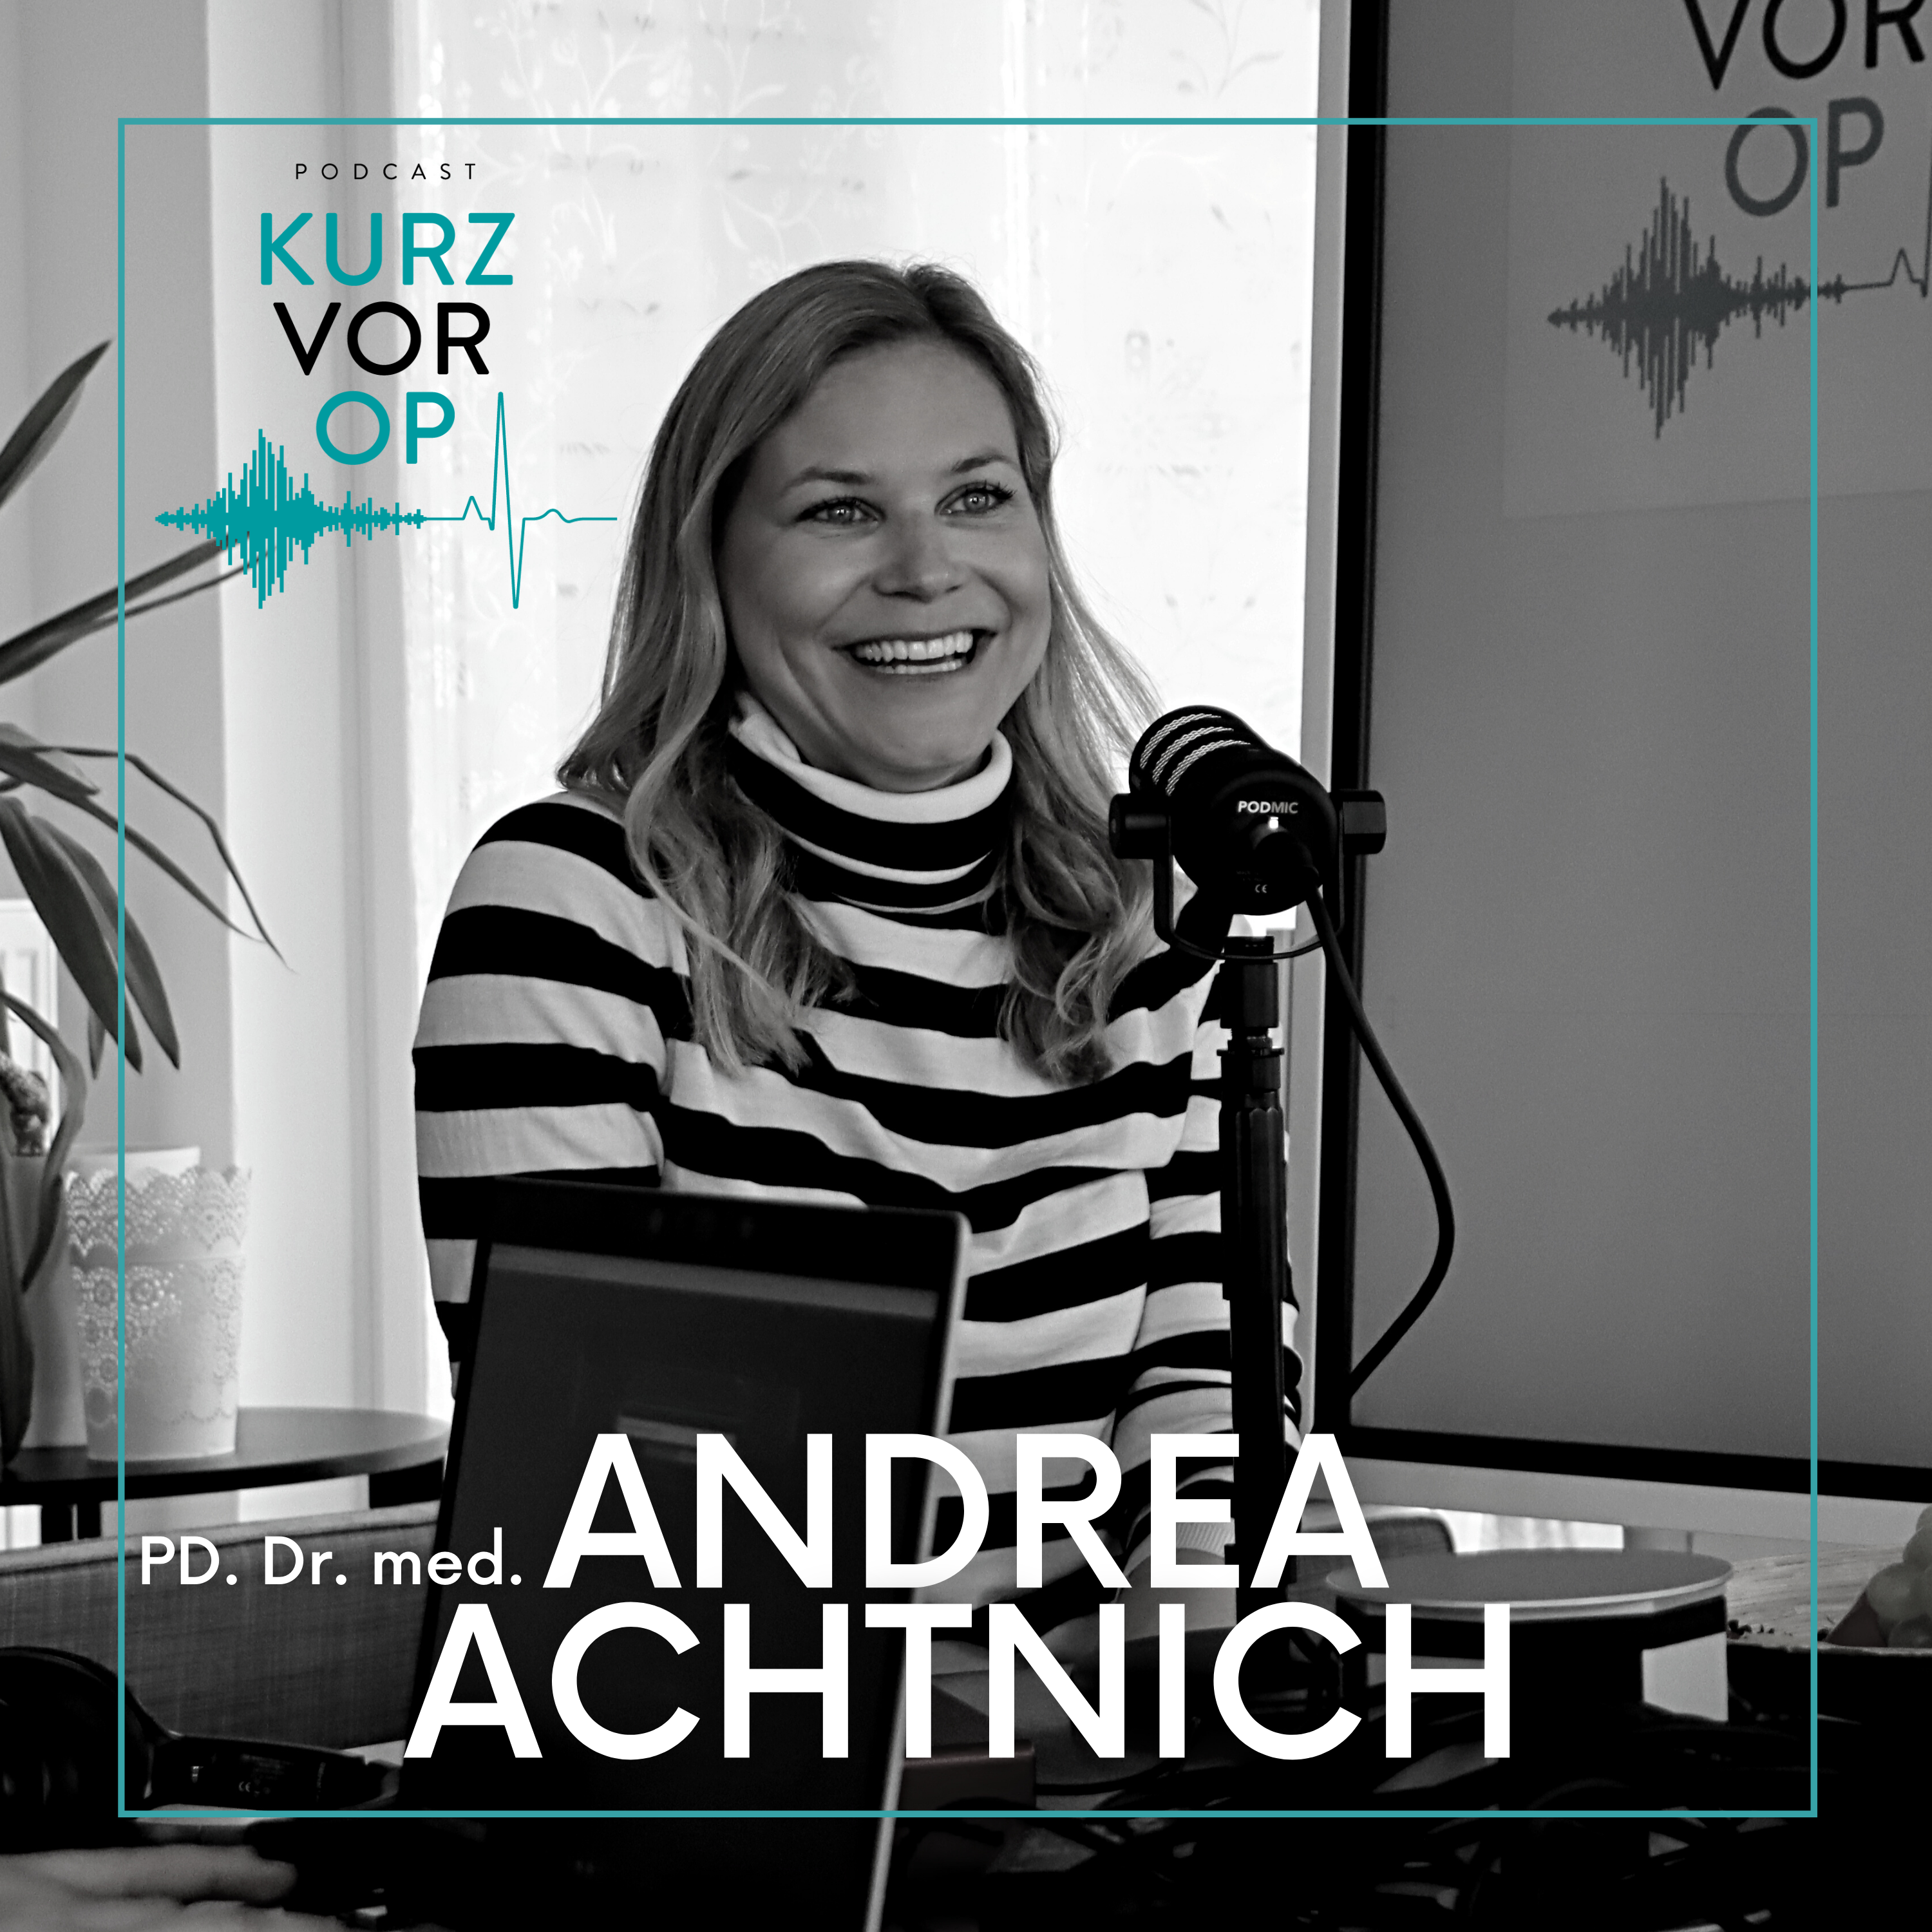 Dr. Andrea Achtnich im OPED Podcast "Kurz vor OP"